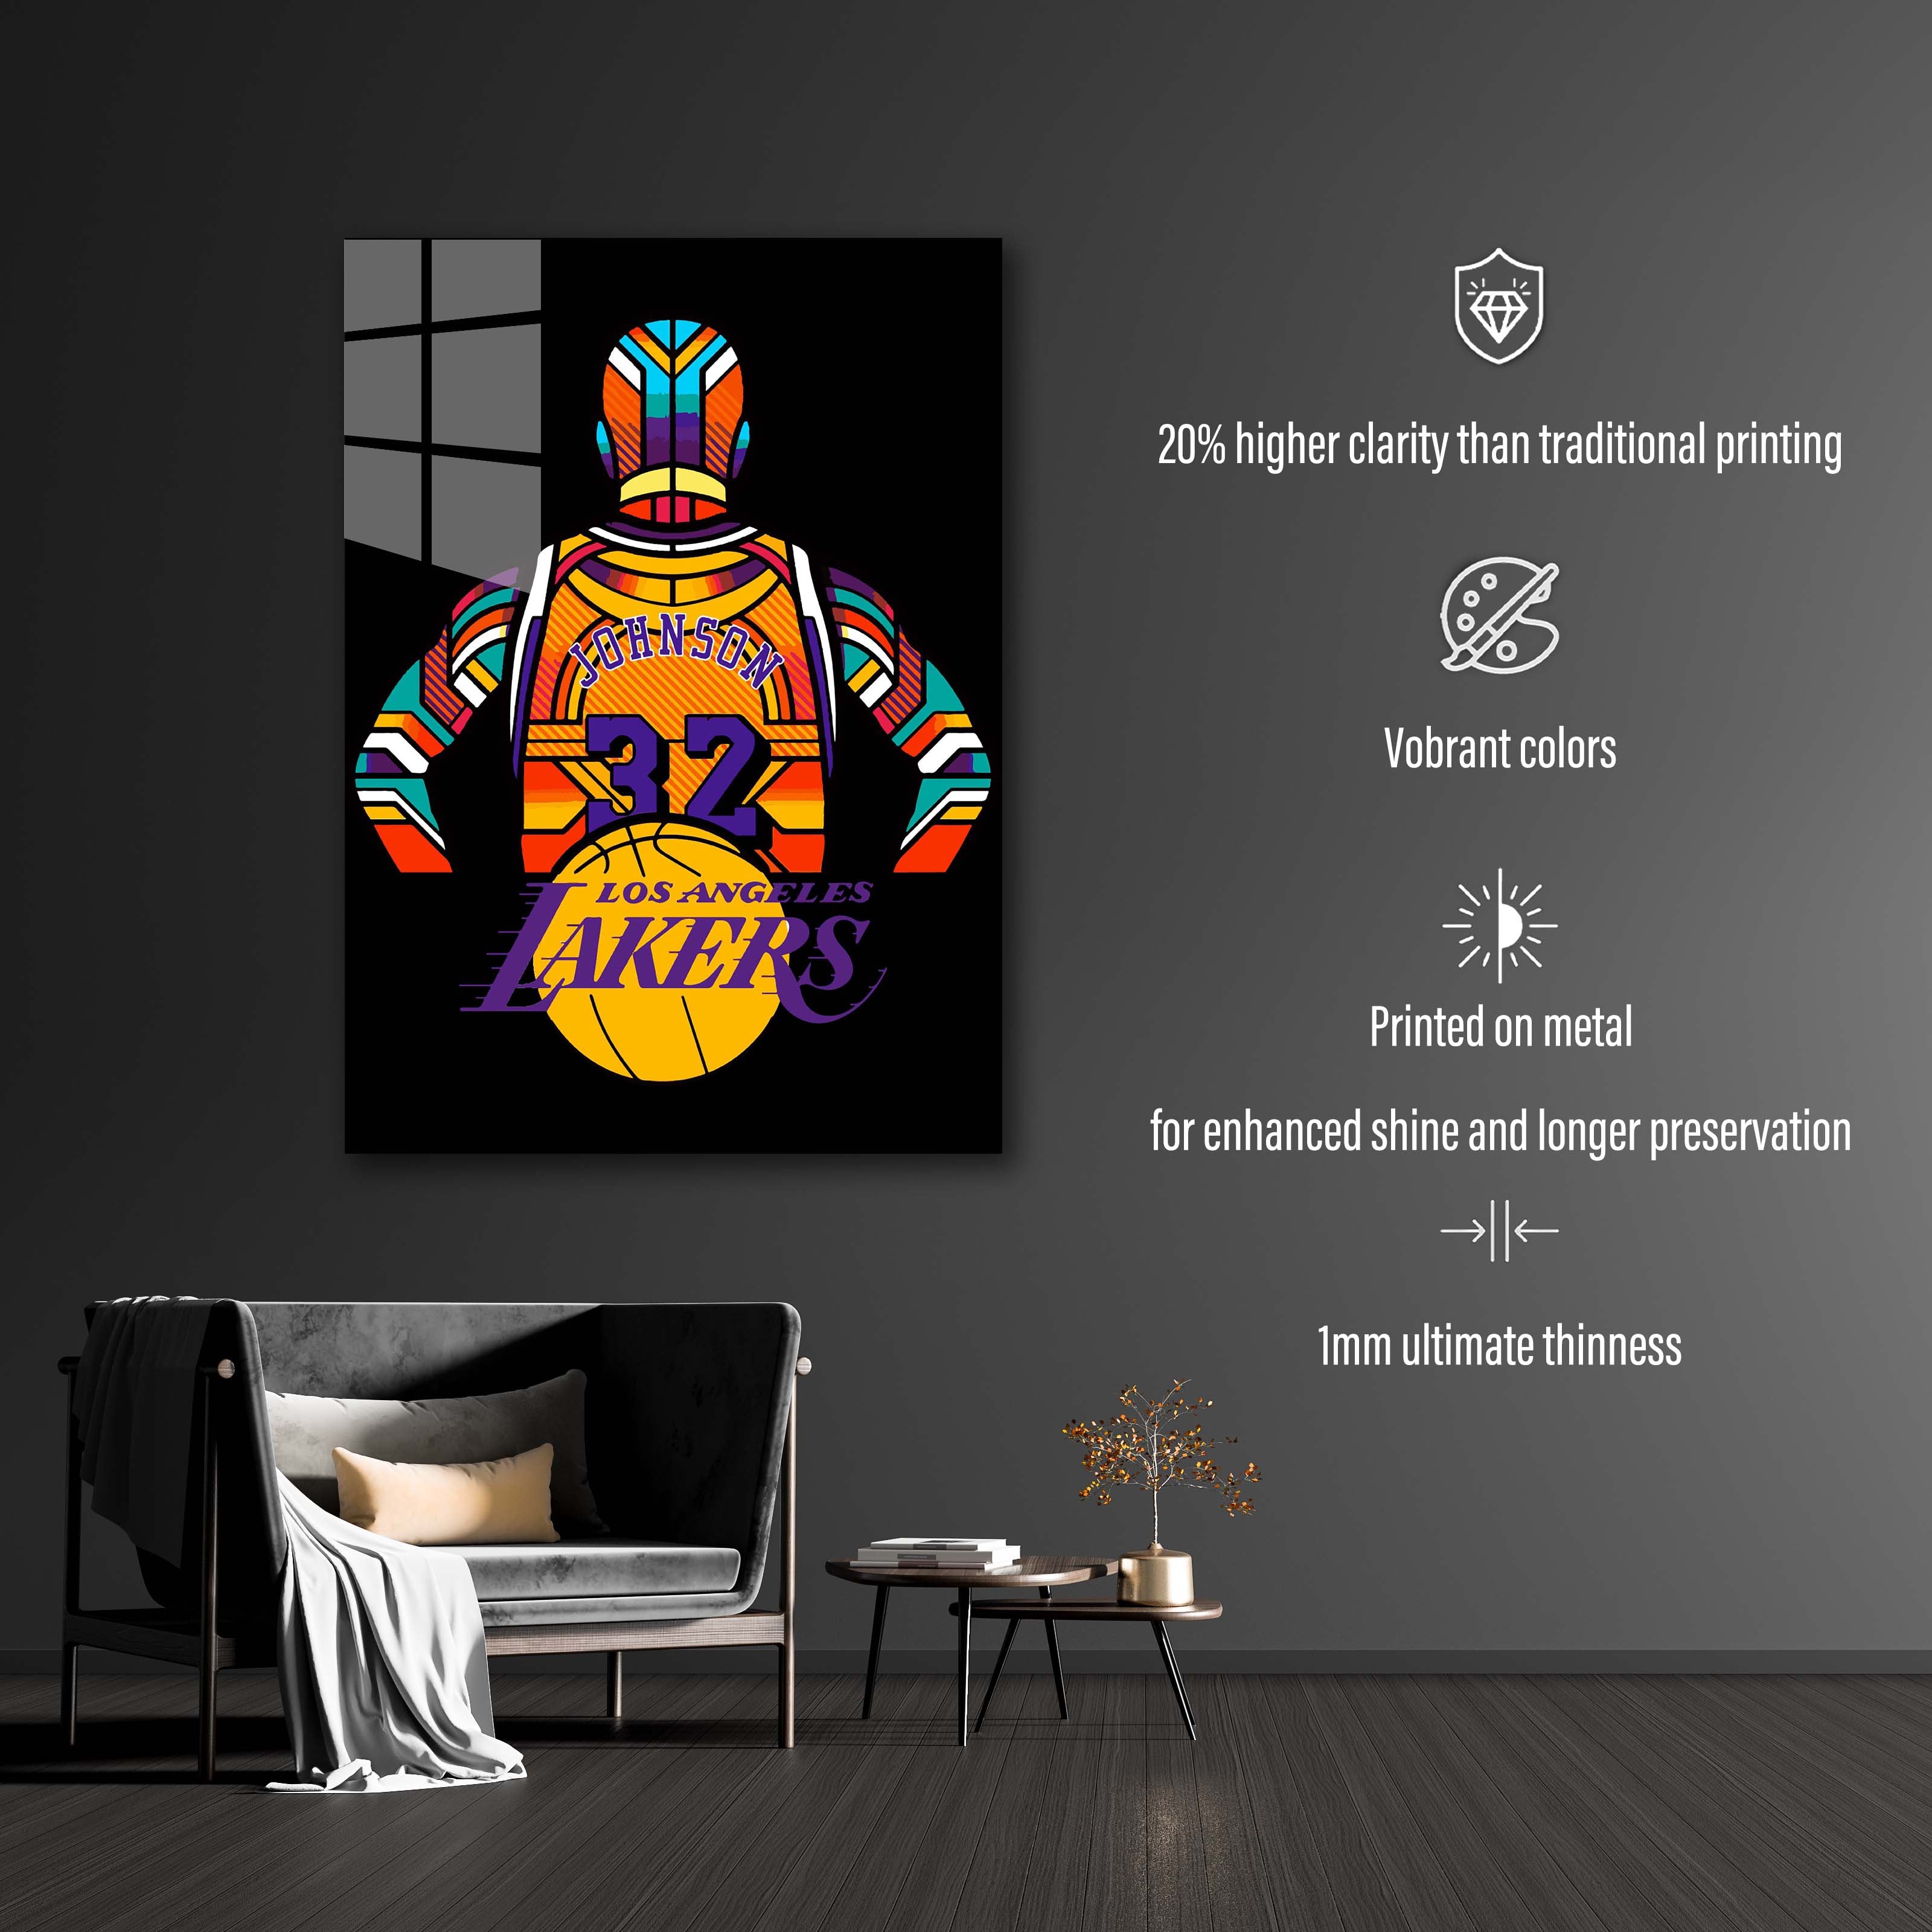 Jhonson Lakers-designed by @My Kido Art